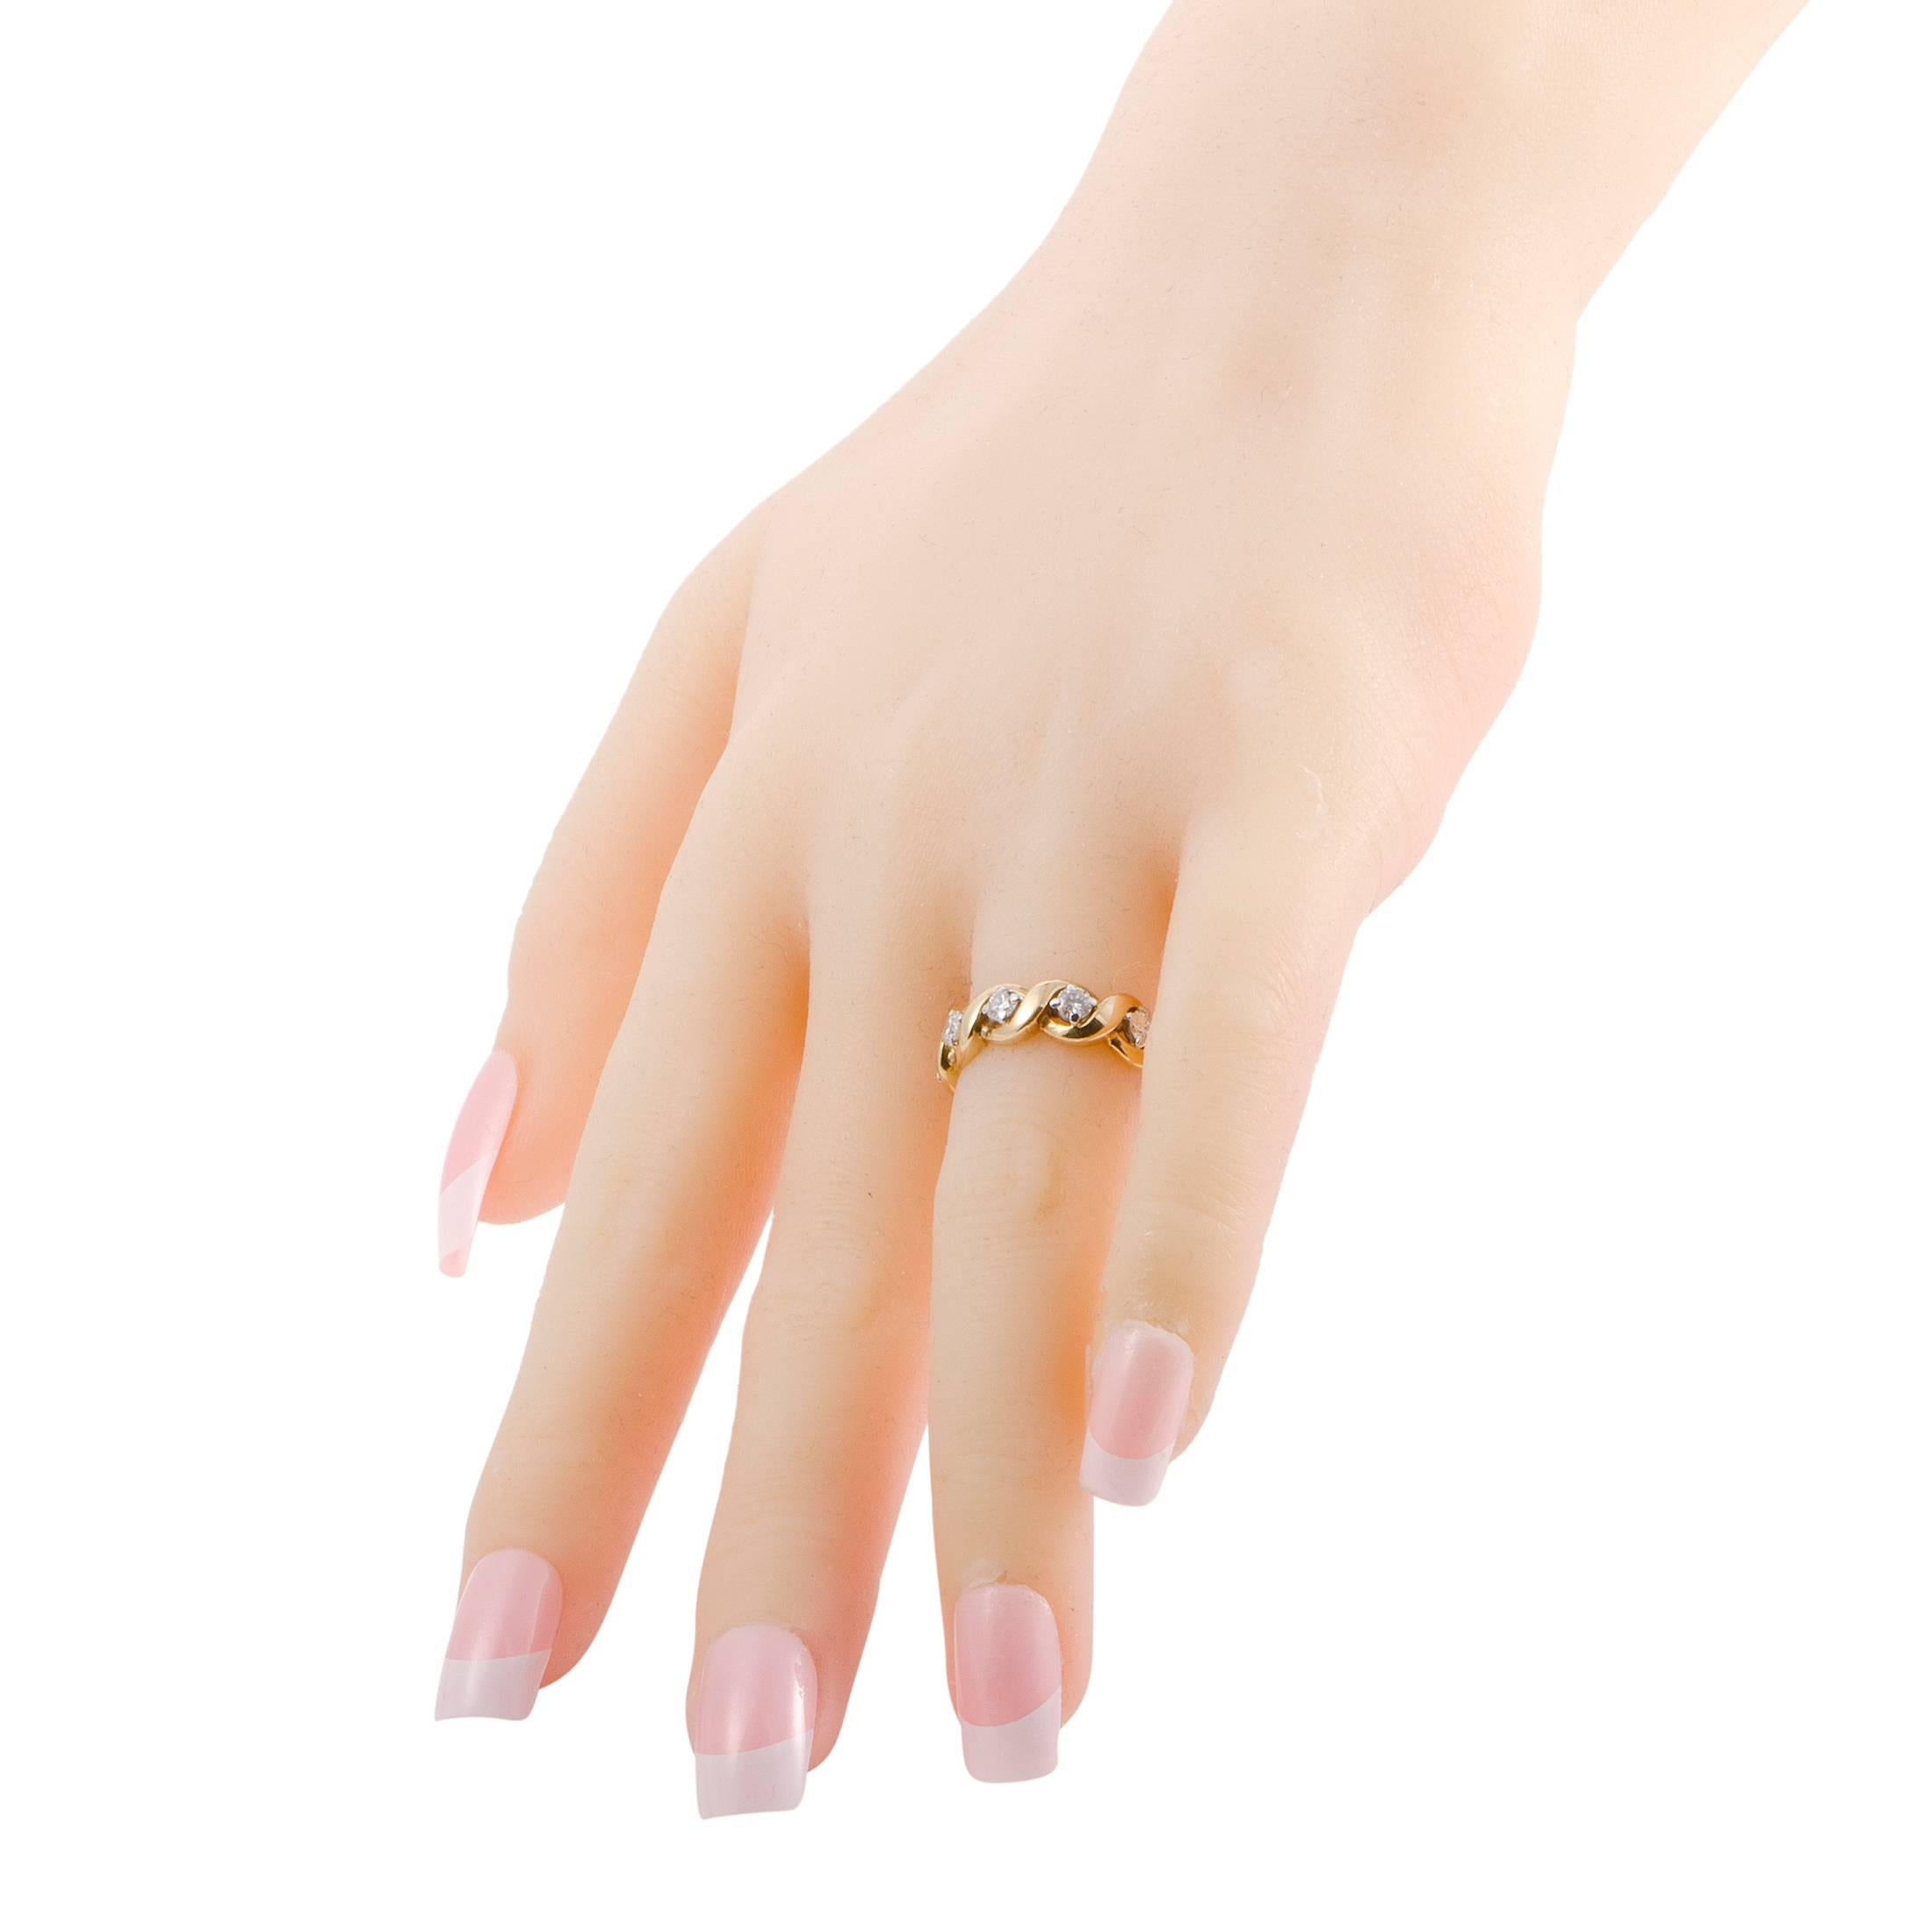 Women's Oscar Heyman Diamond and Yellow Gold Eternity Band Ring